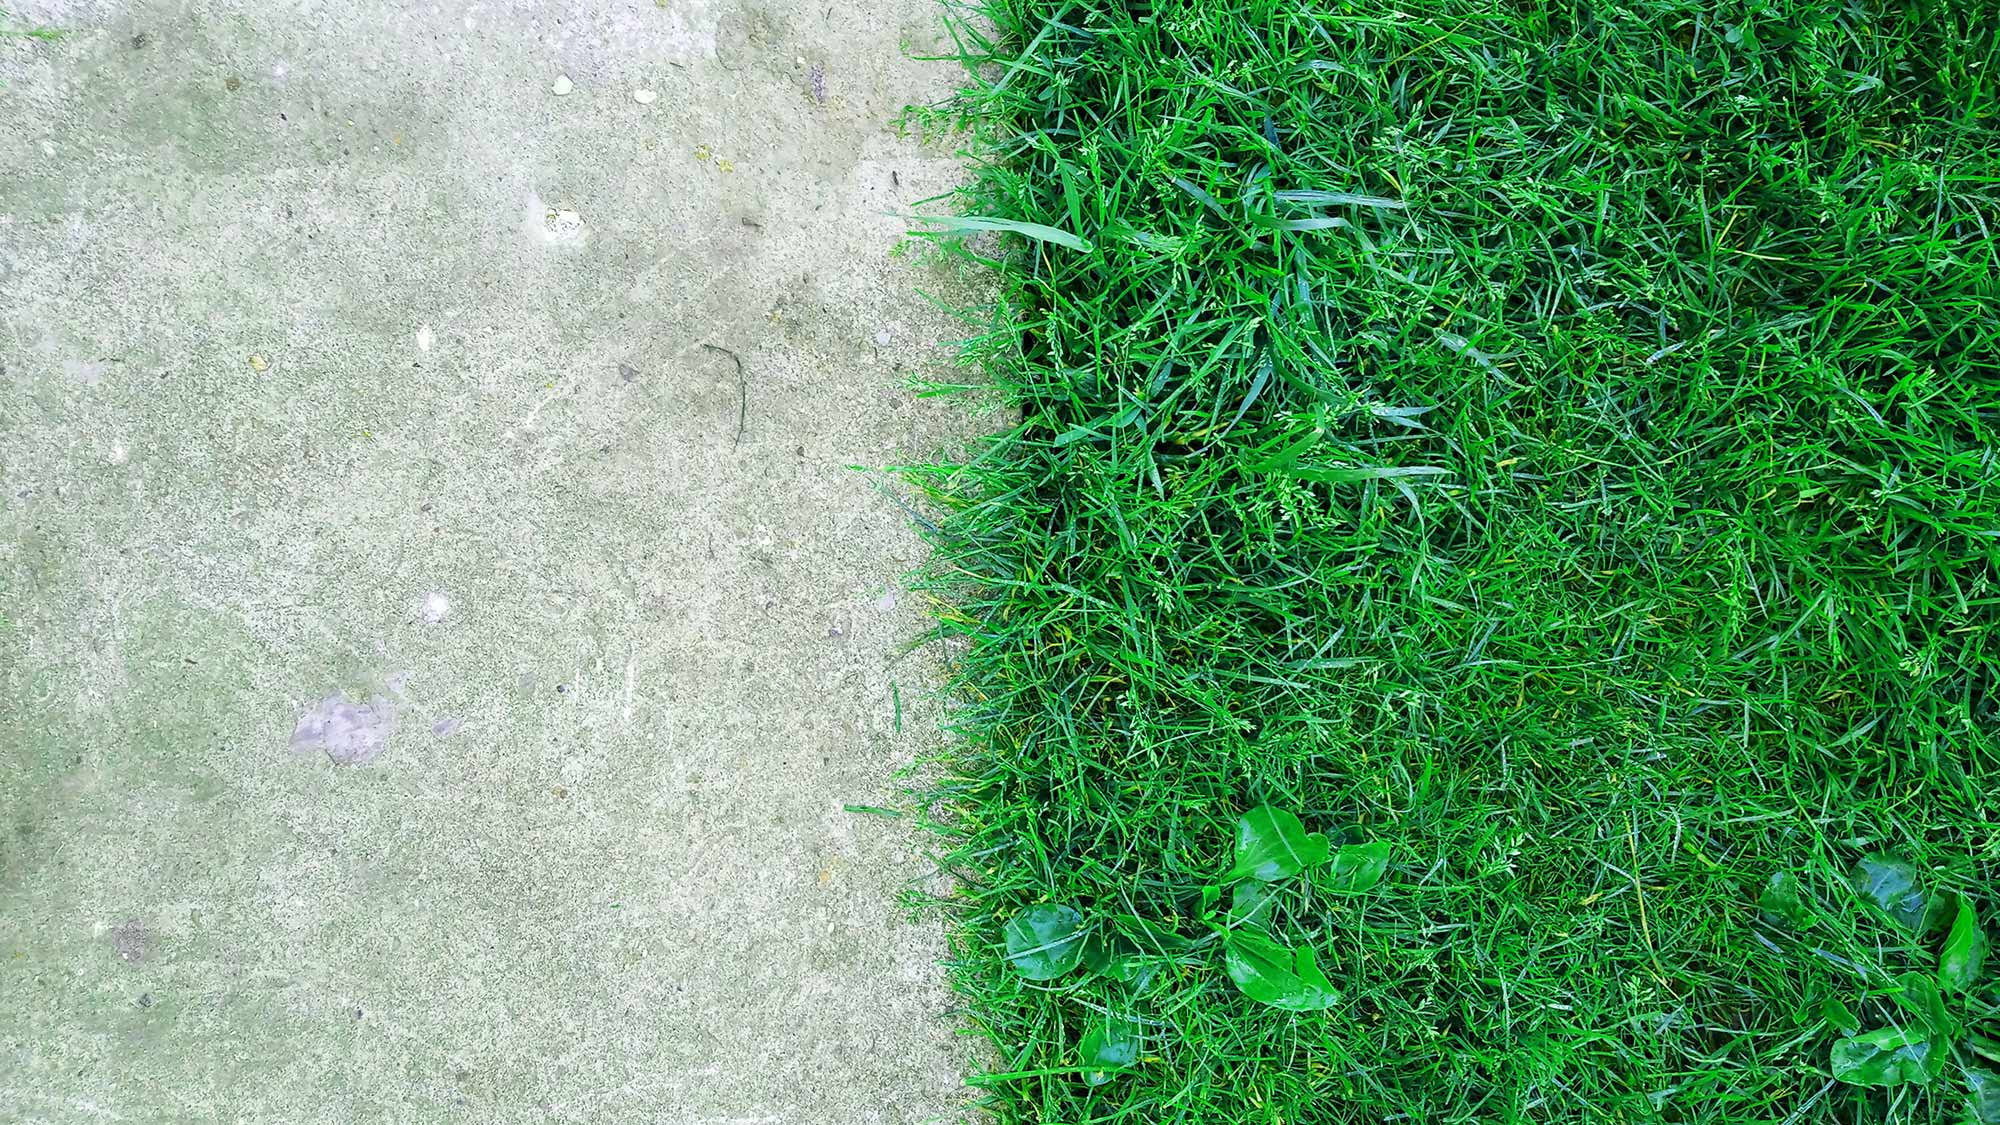 Grass and concrete